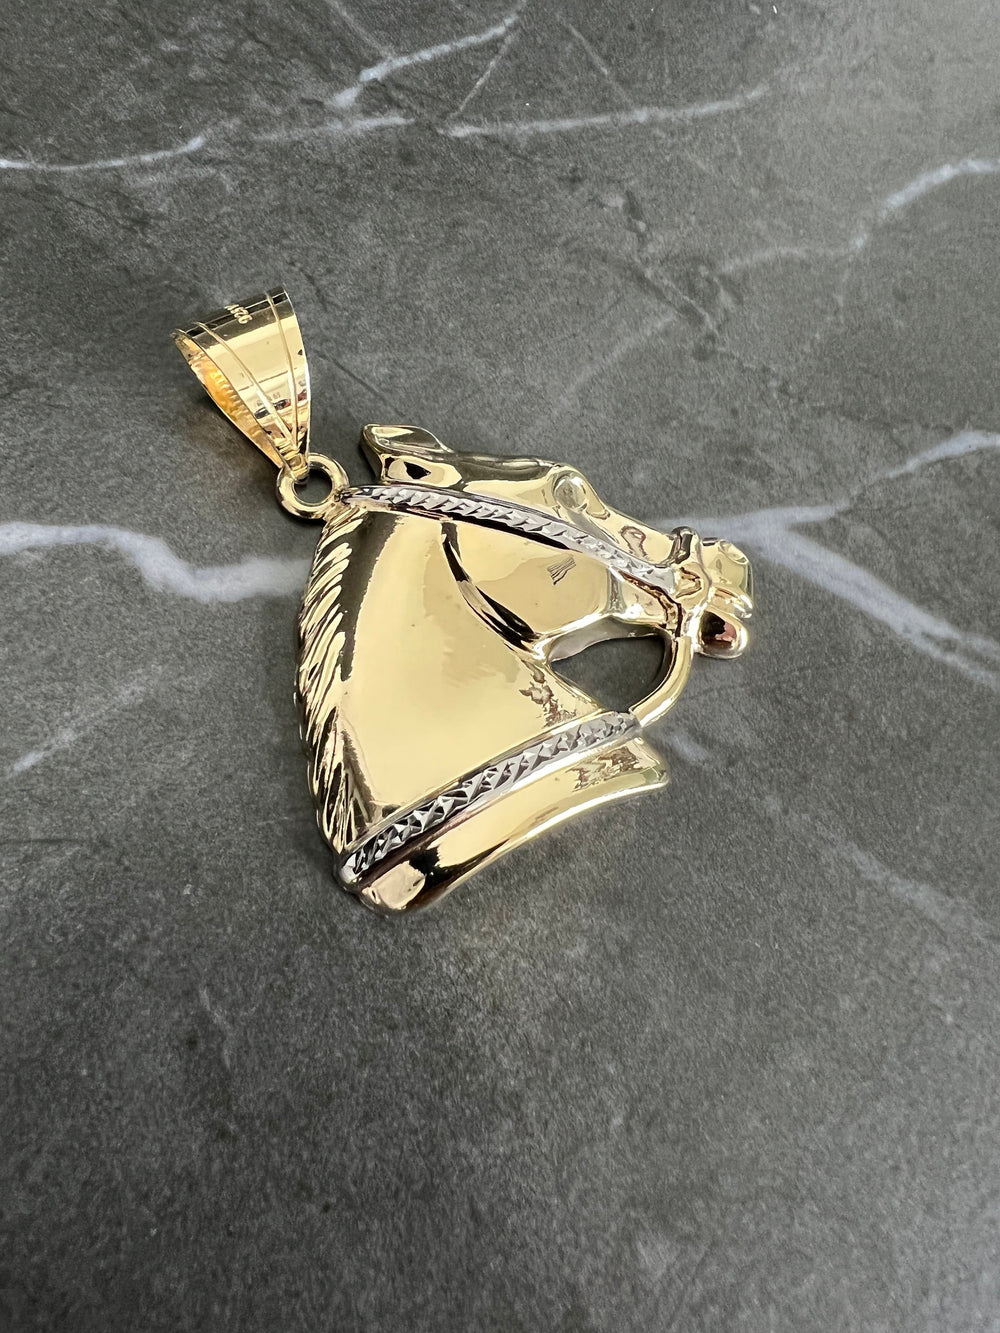 10K Yellow Gold .925 Sterling Silver Diamond Cut Running Horse Charm/Pendant, Gold Horse Animal Lover Pendant Jewelry, Horseshoe Style Charm